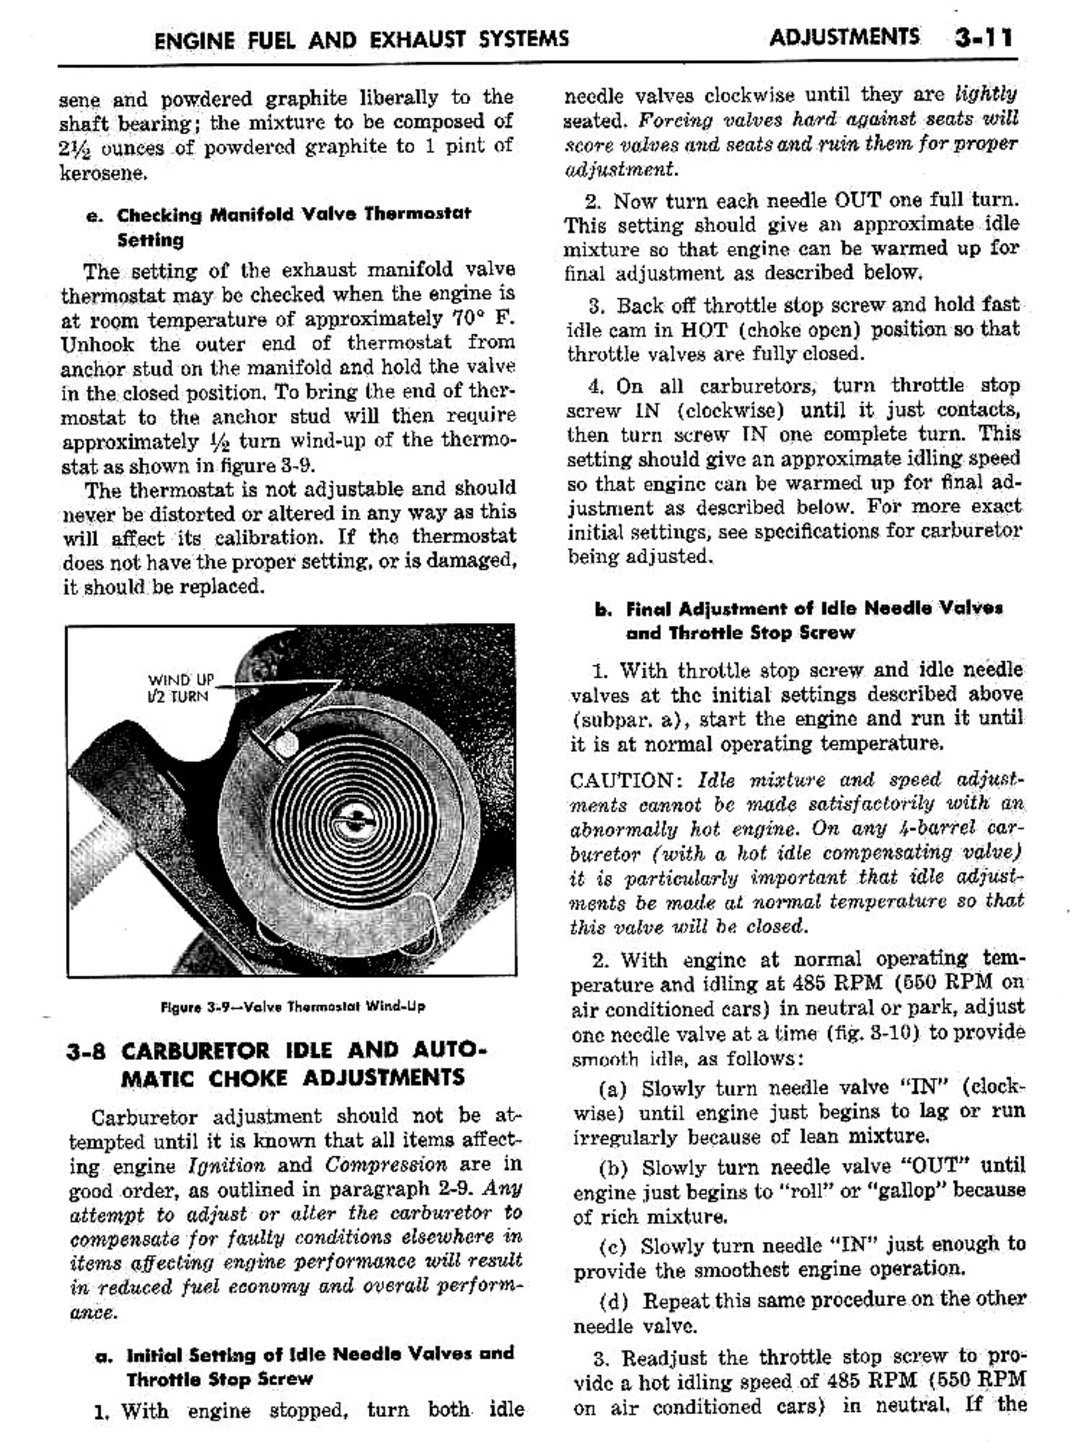 n_04 1959 Buick Shop Manual - Engine Fuel & Exhaust-011-011.jpg